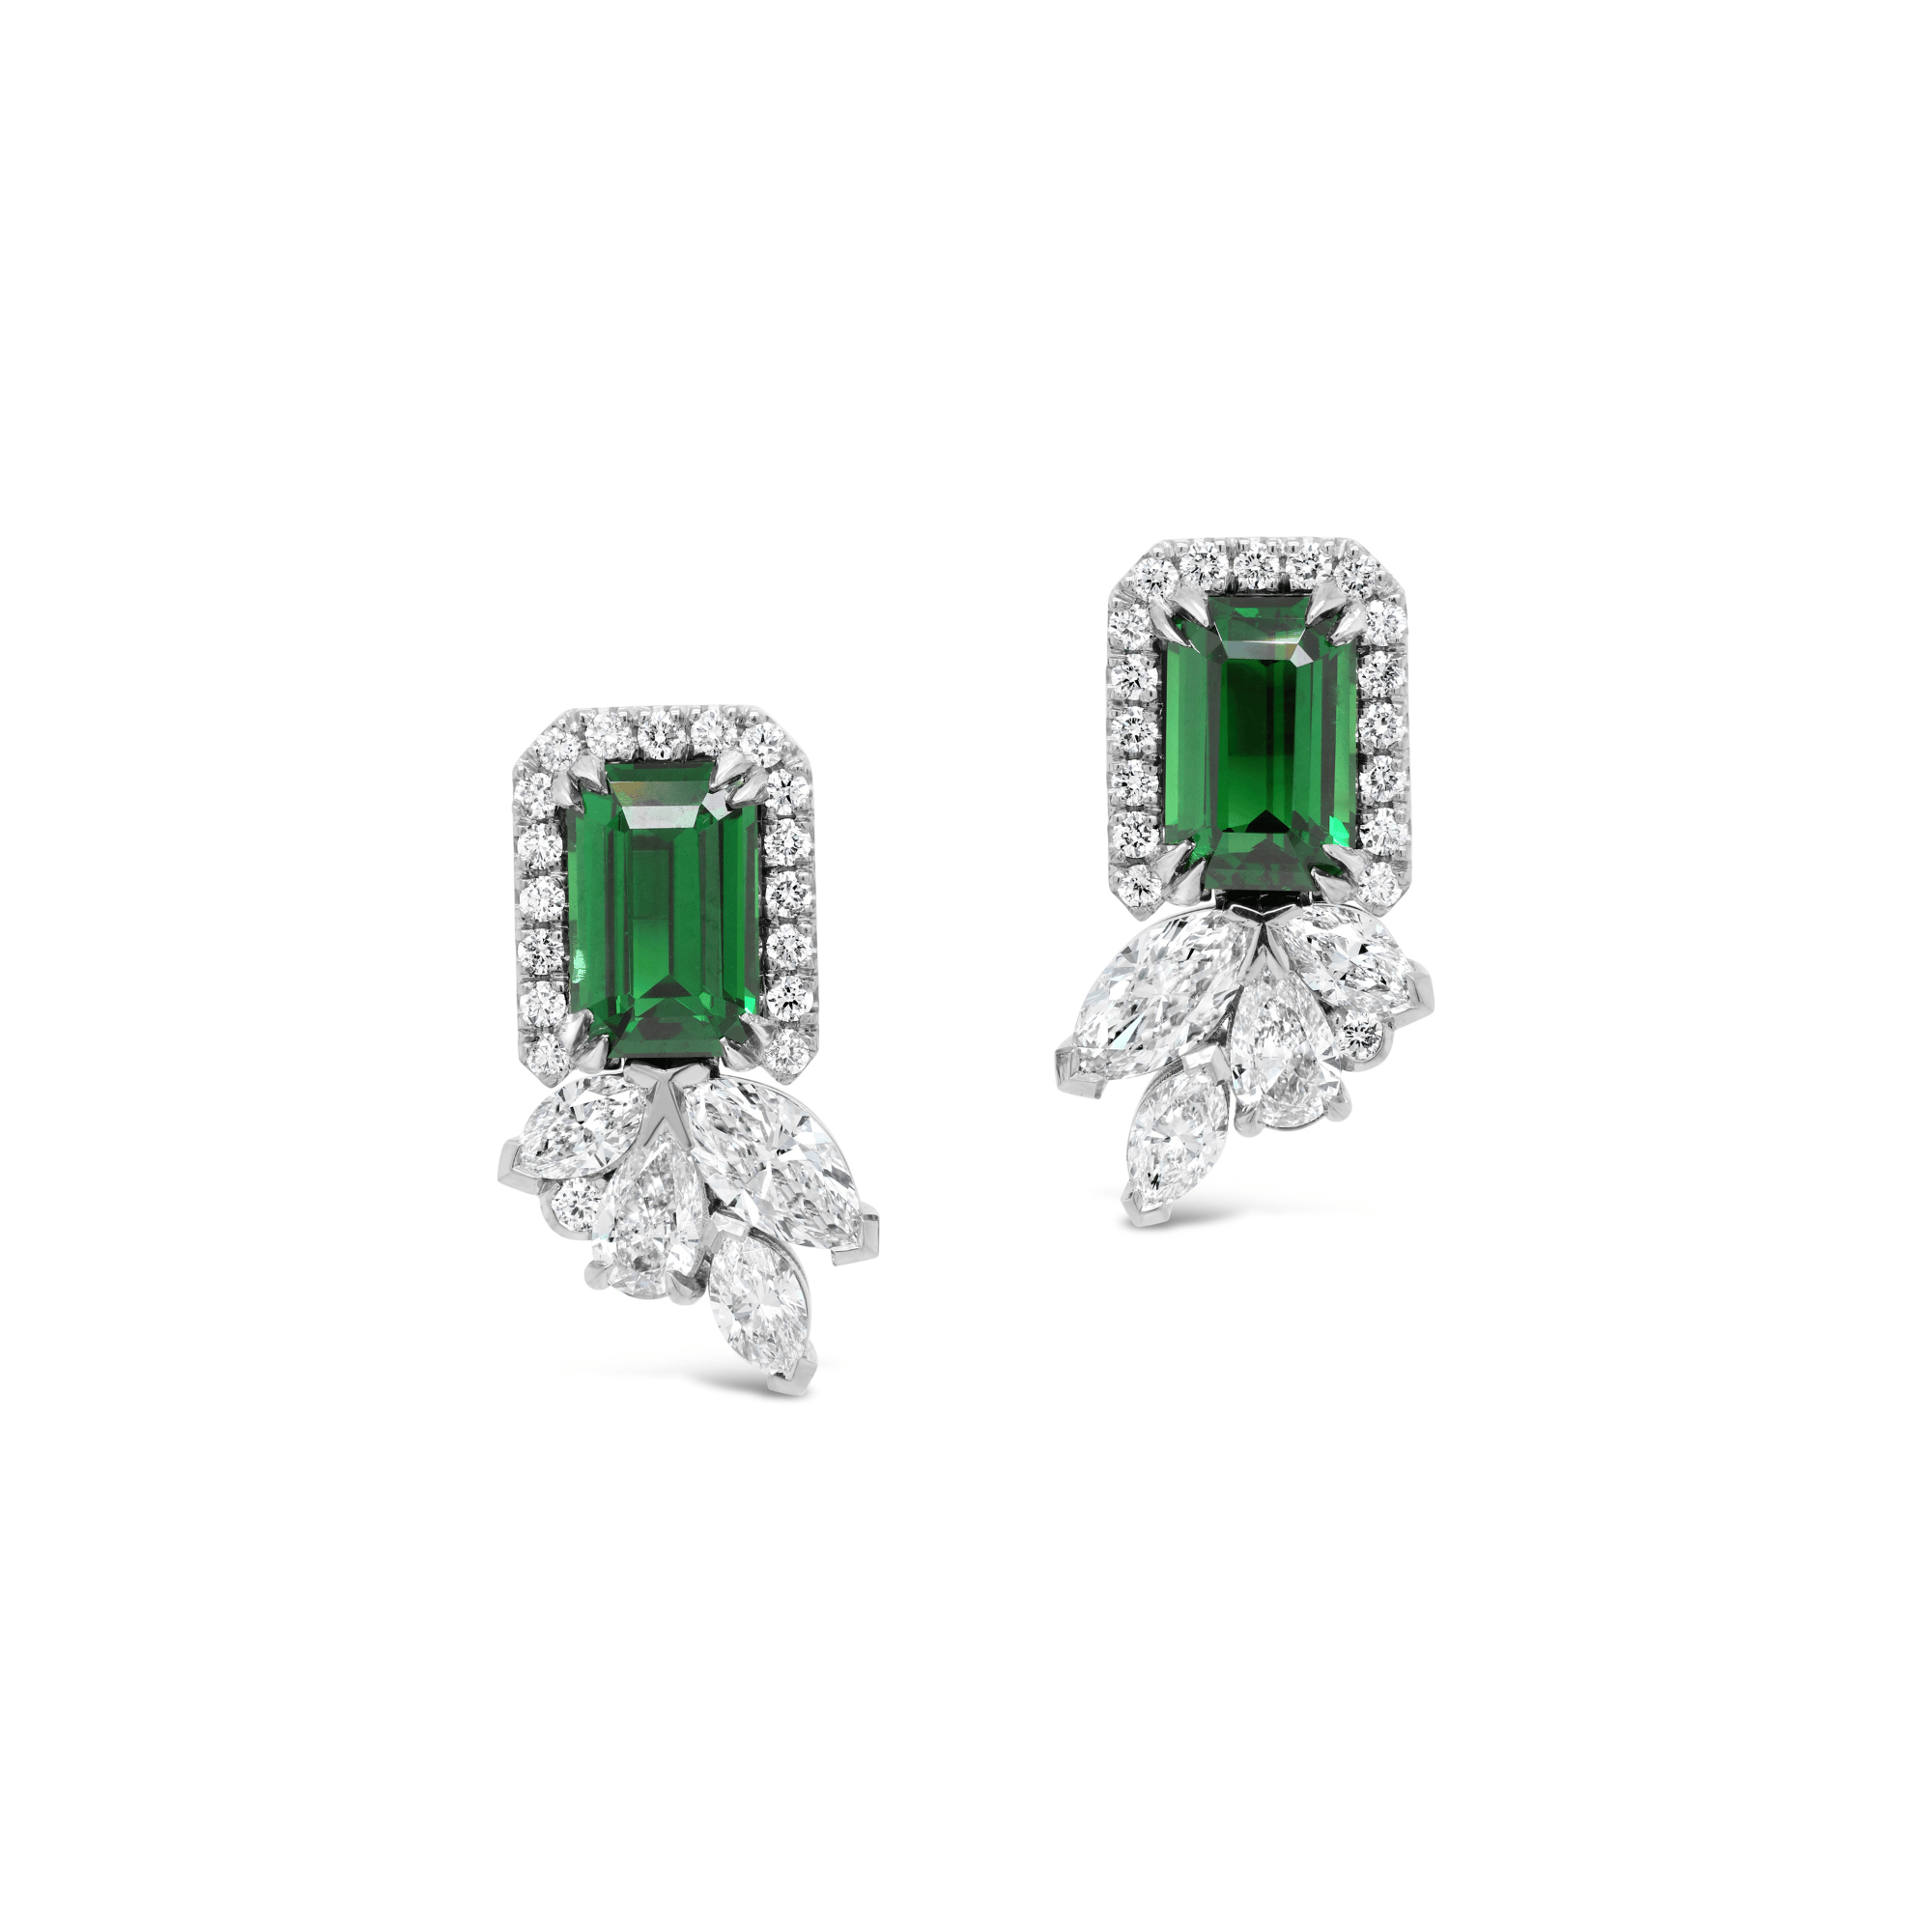 Emerald green tsavorite earrings with diamonds